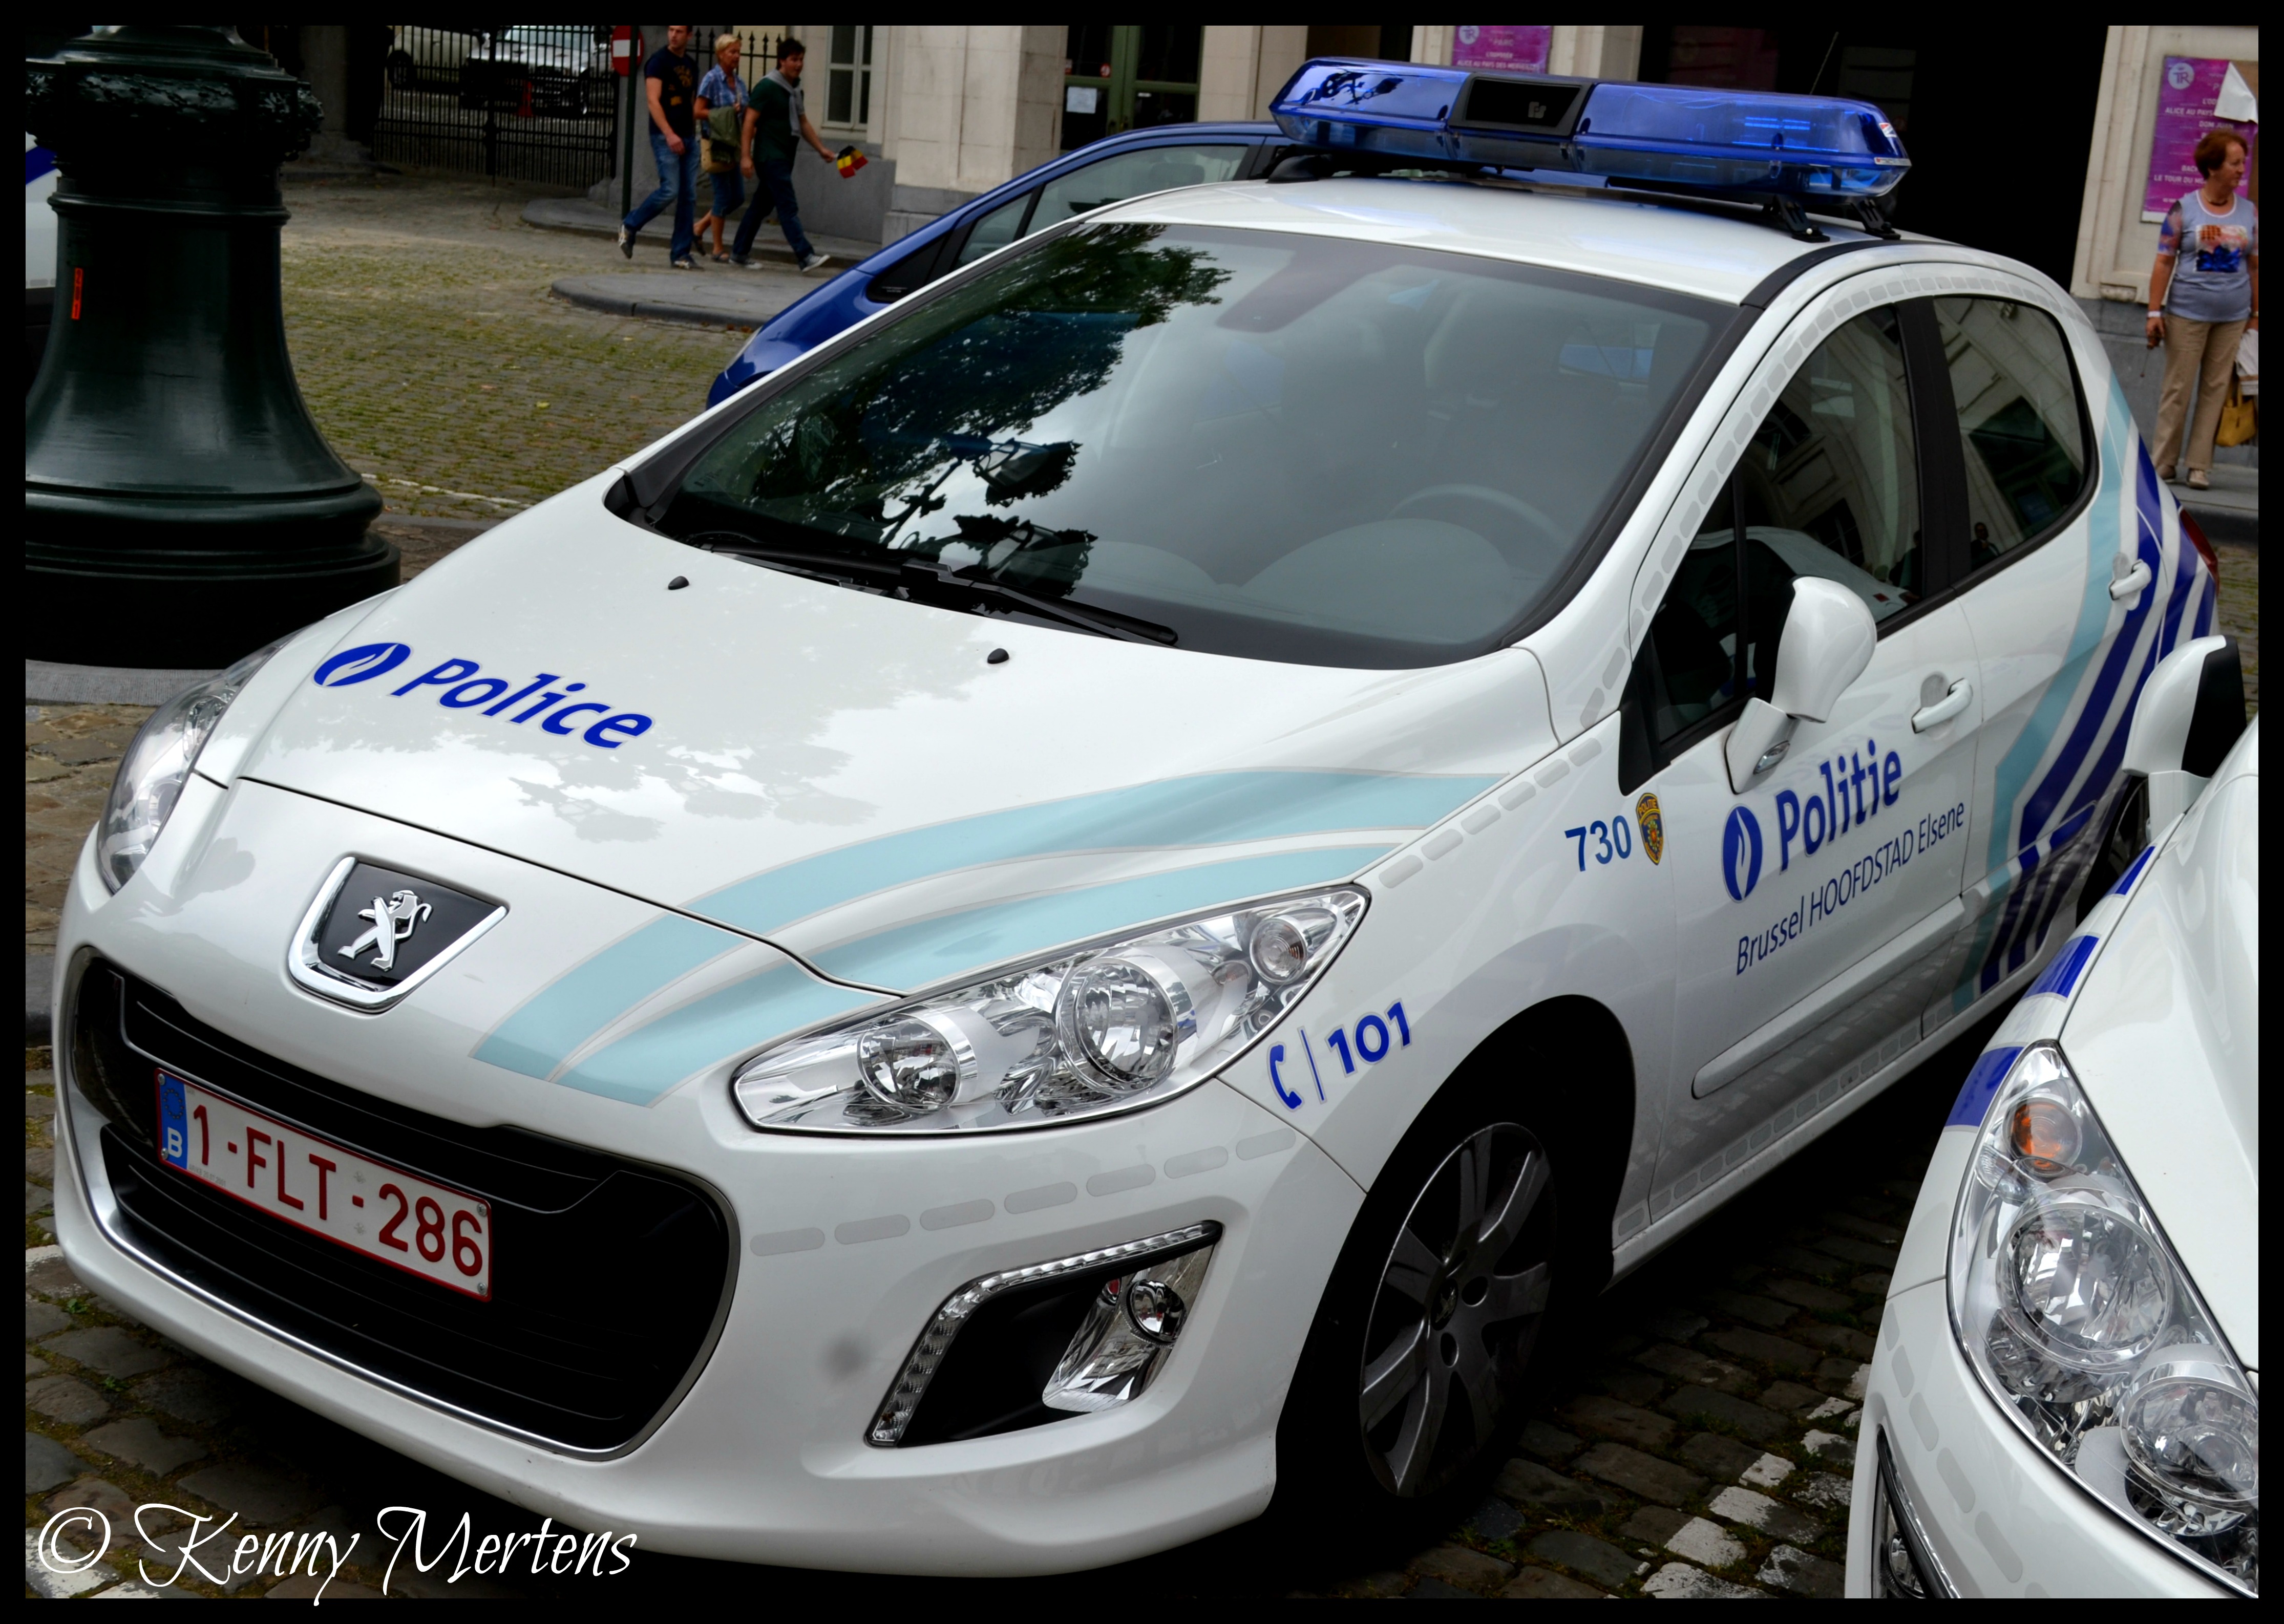 Zone de police Bruxelles Capitale Ixelles (ZP 5339 - PolBru) - Page 3 14643417509_57e0cf9ed5_o